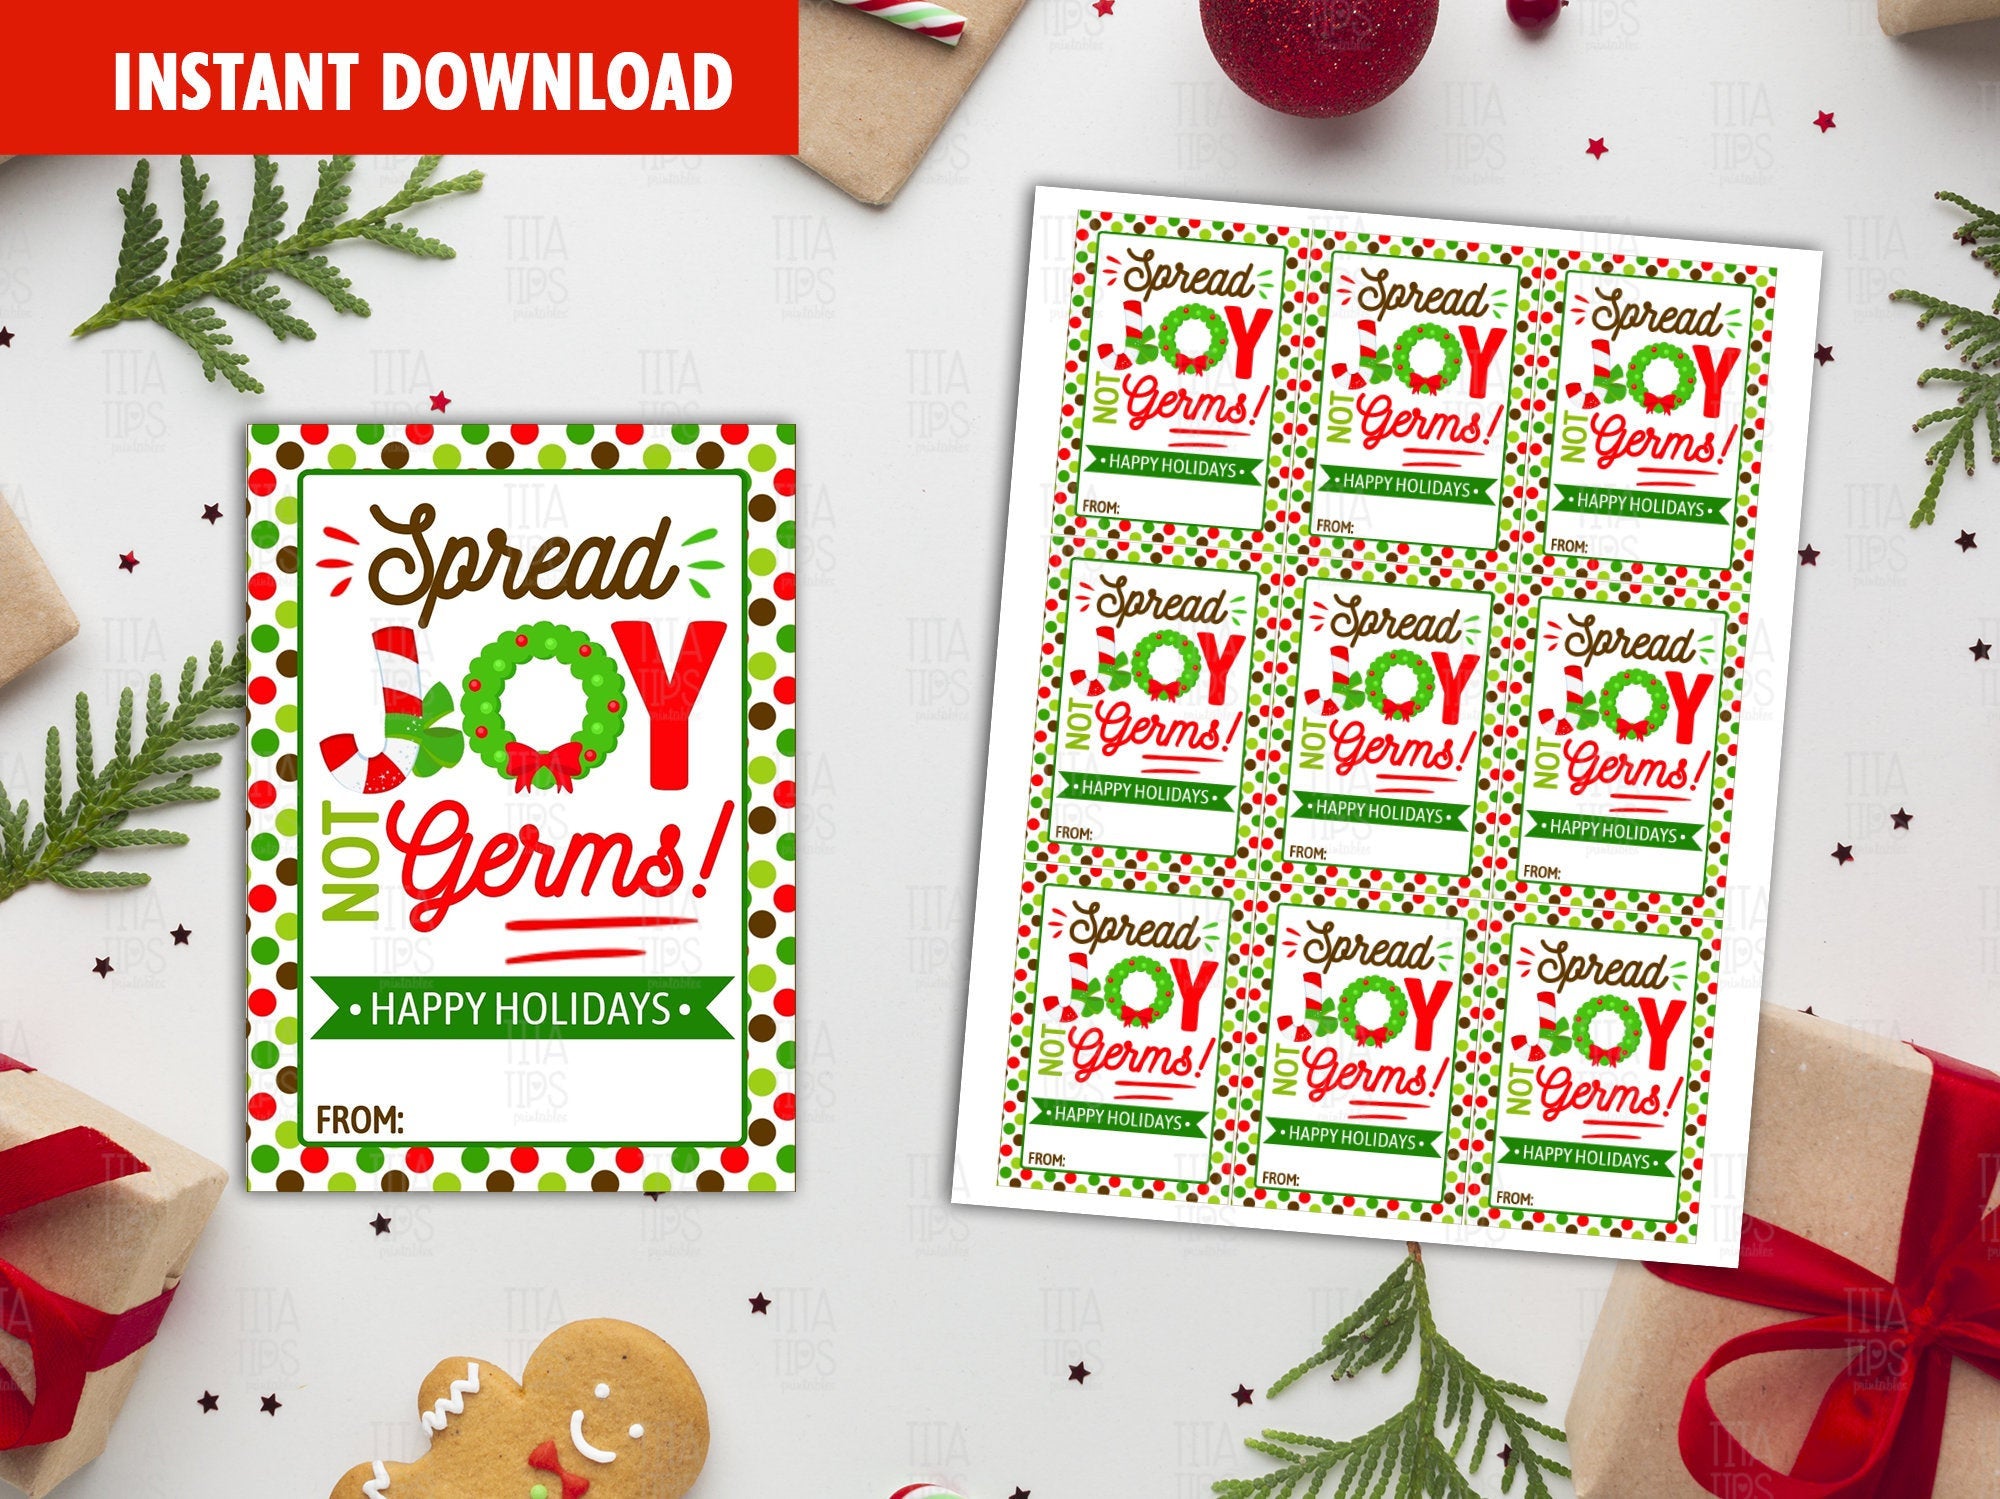 spread-joy-not-germs-free-printable-printable-templates